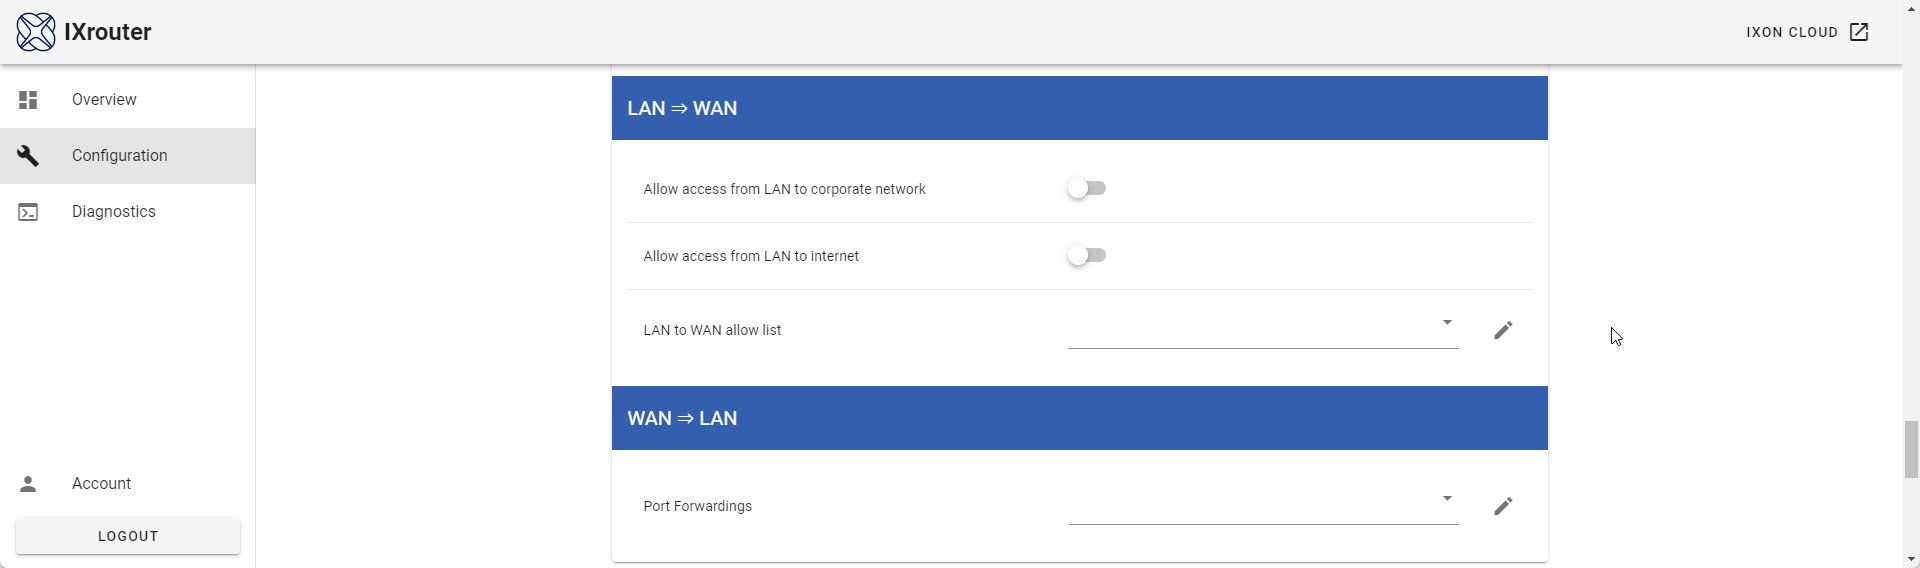 LAN_to_WAN_allow_table.gif